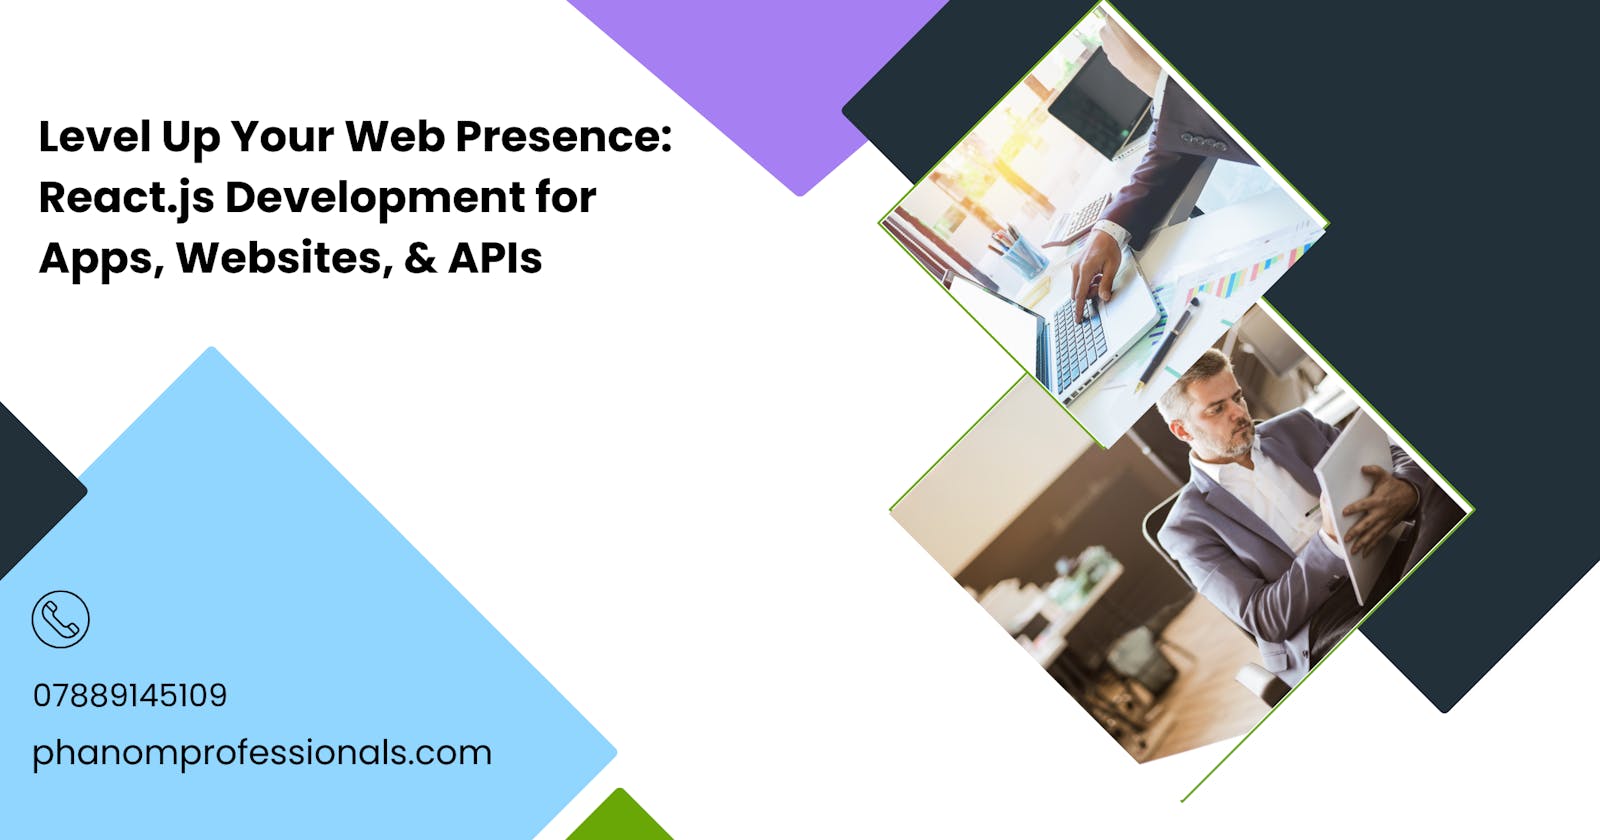 Level Up Your Web Presence: React.js Development for Apps, Websites, & APIs